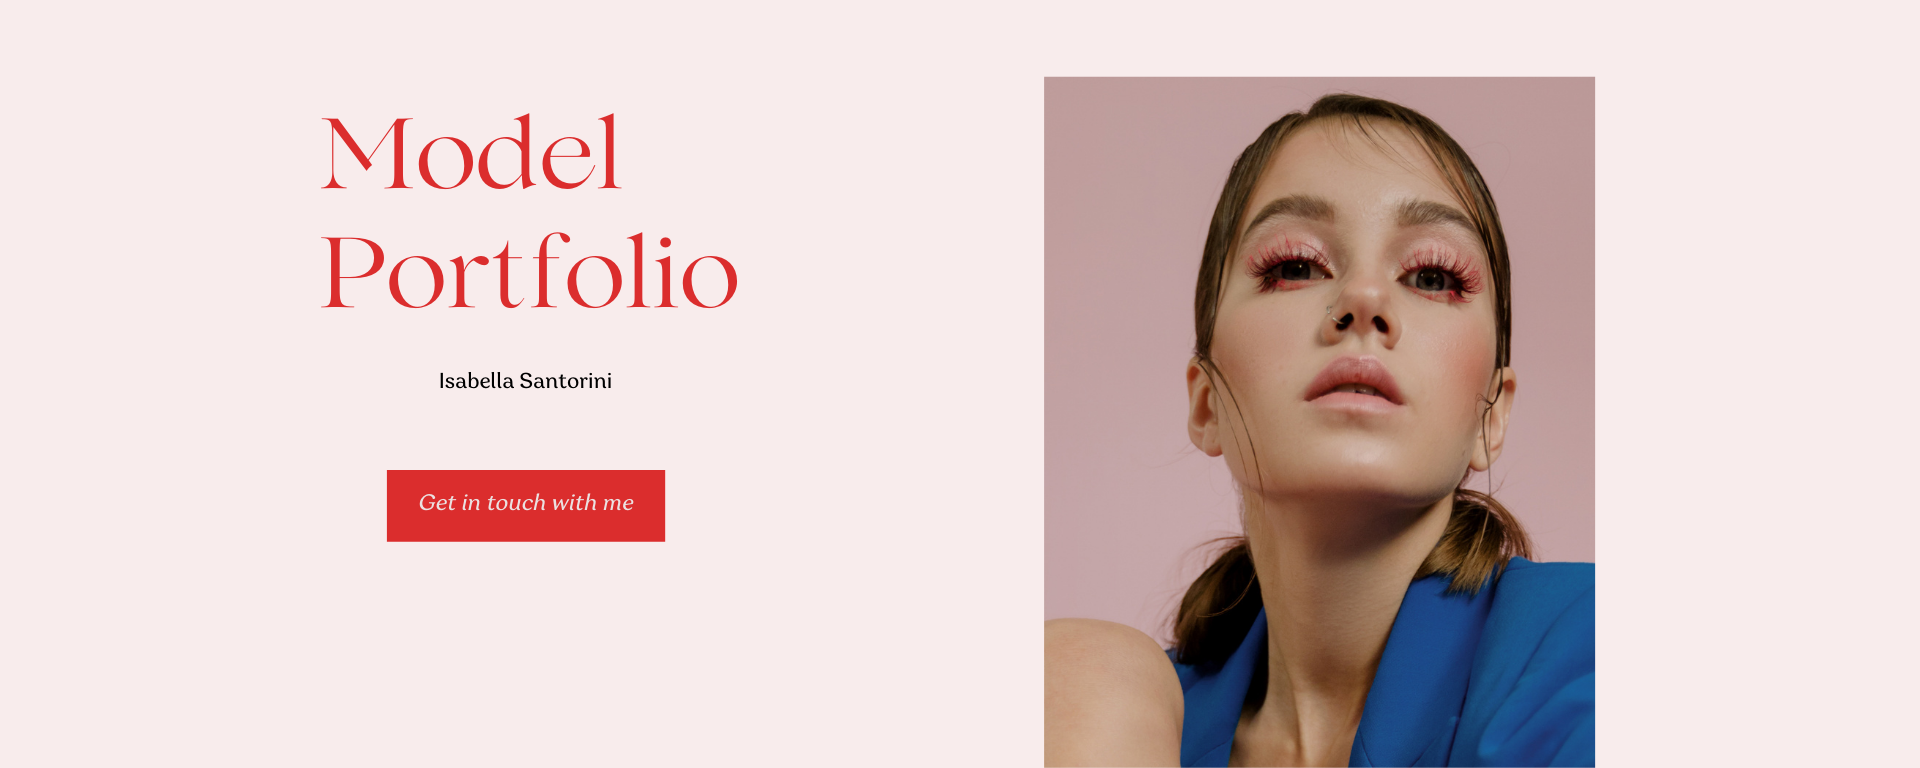 Model Portfolio Website